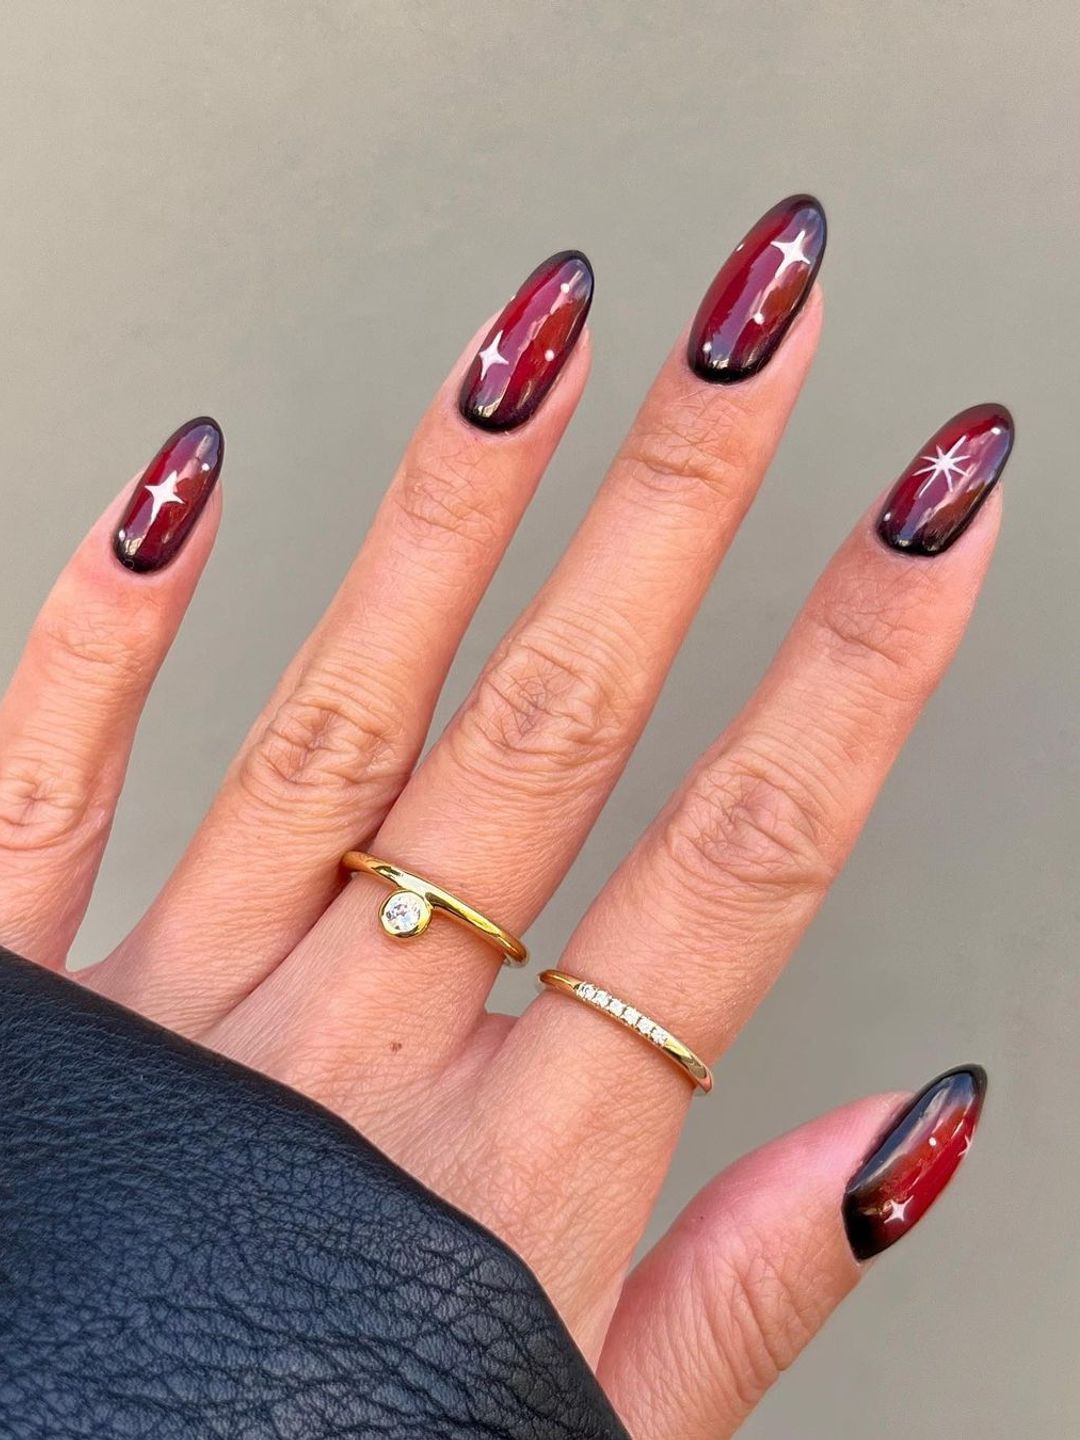 Vampire nails 